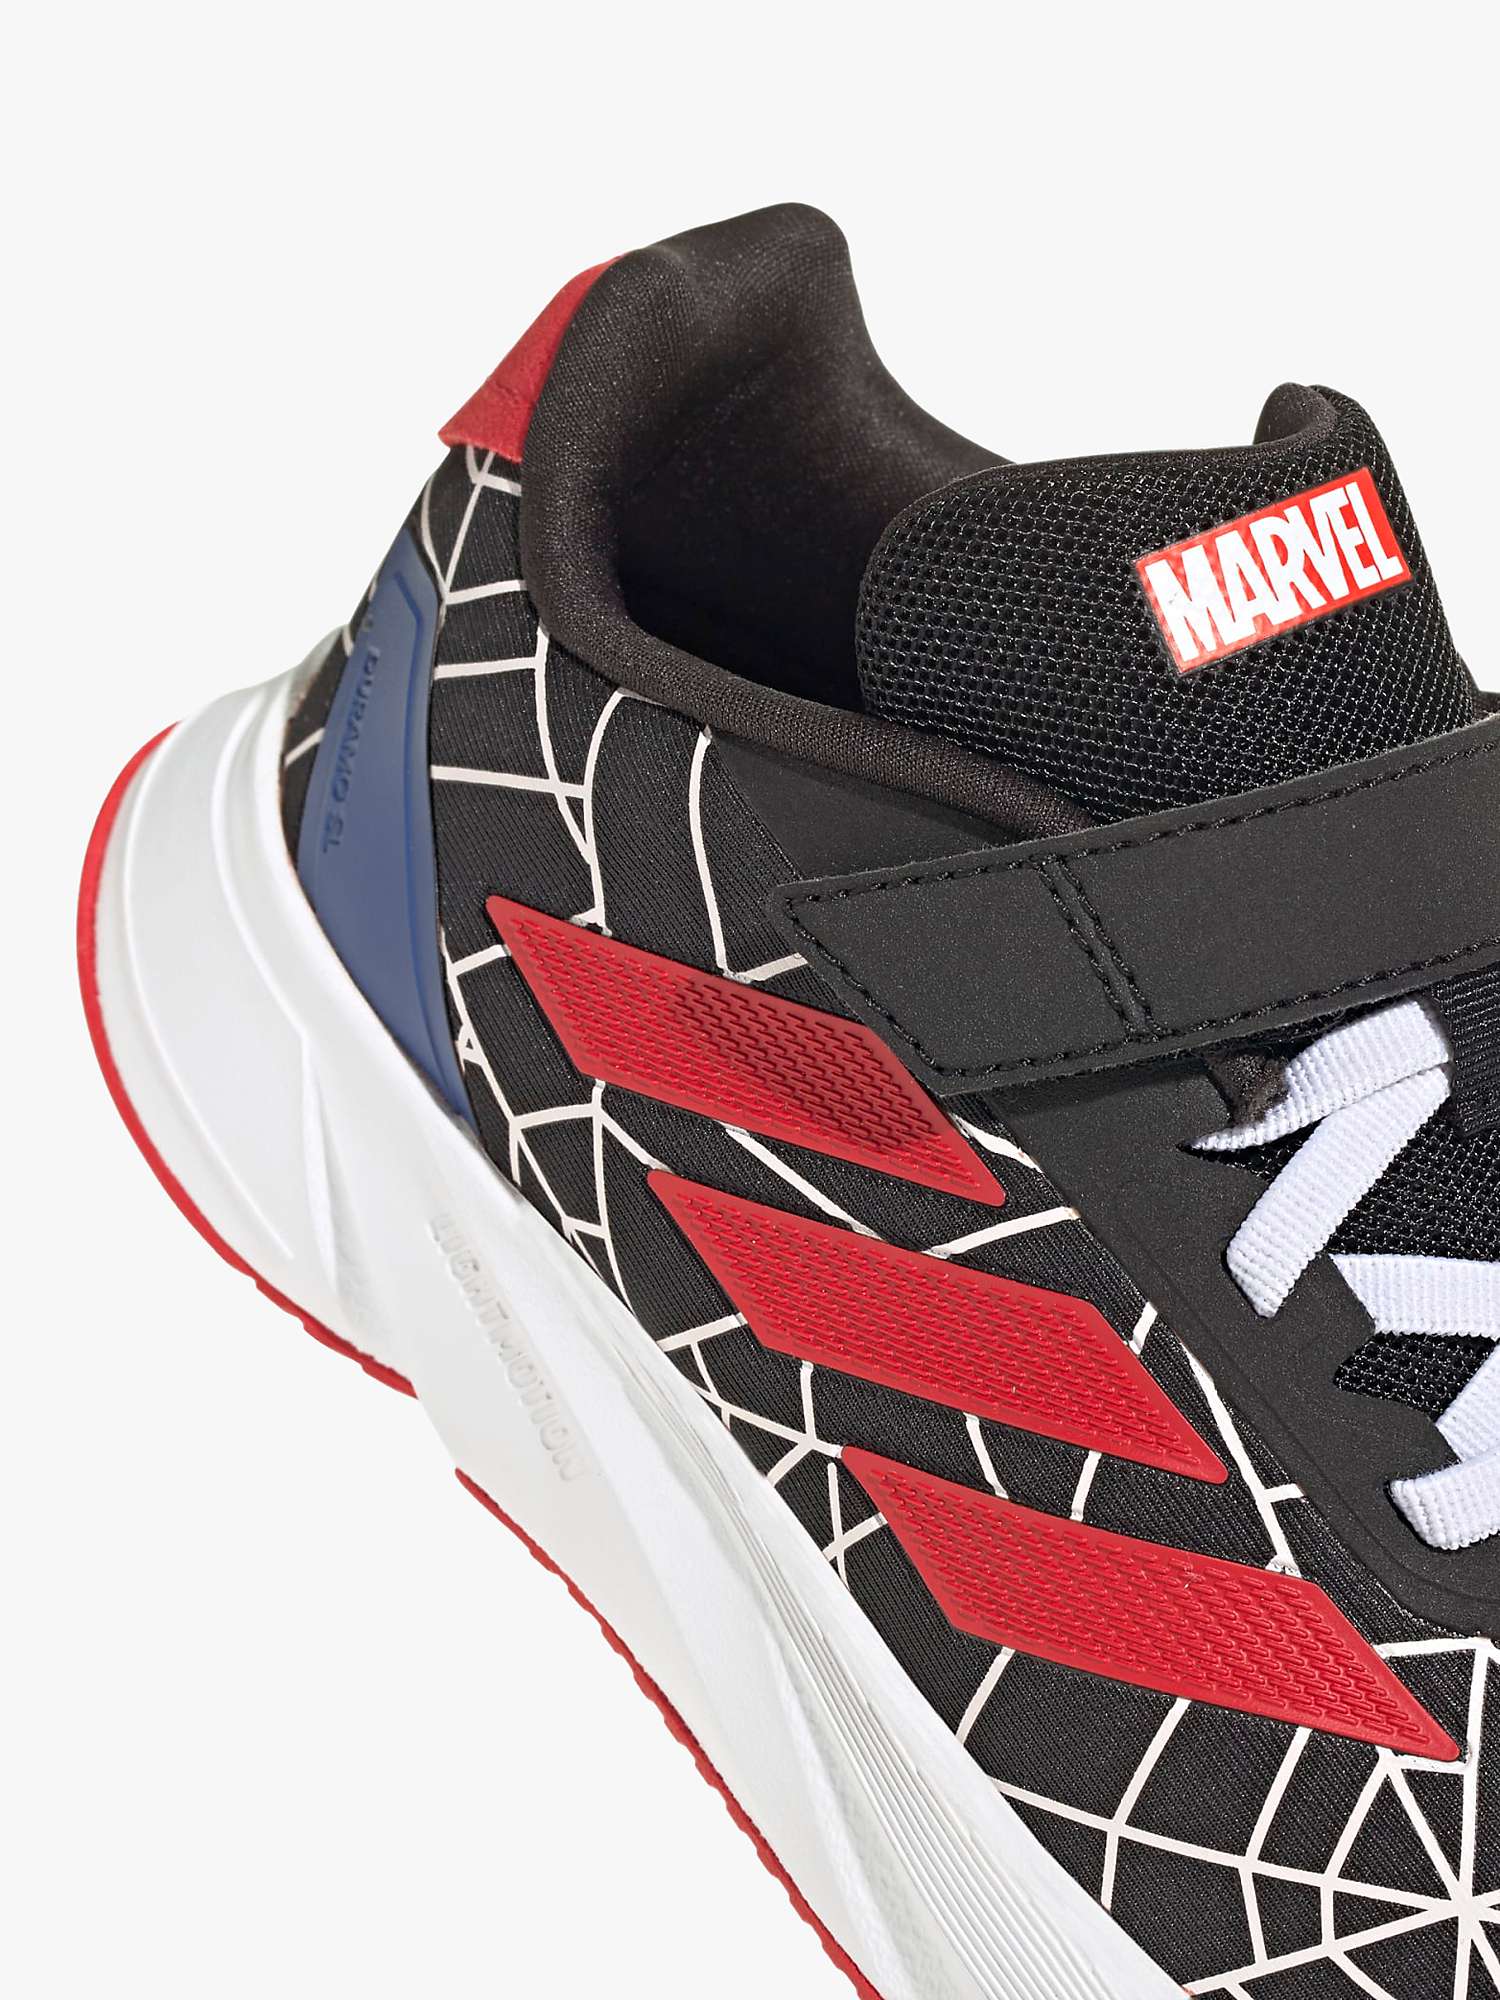 Buy adidas Kids' Duramo Marvel Spiderman Trainers, Black/Red Online at johnlewis.com